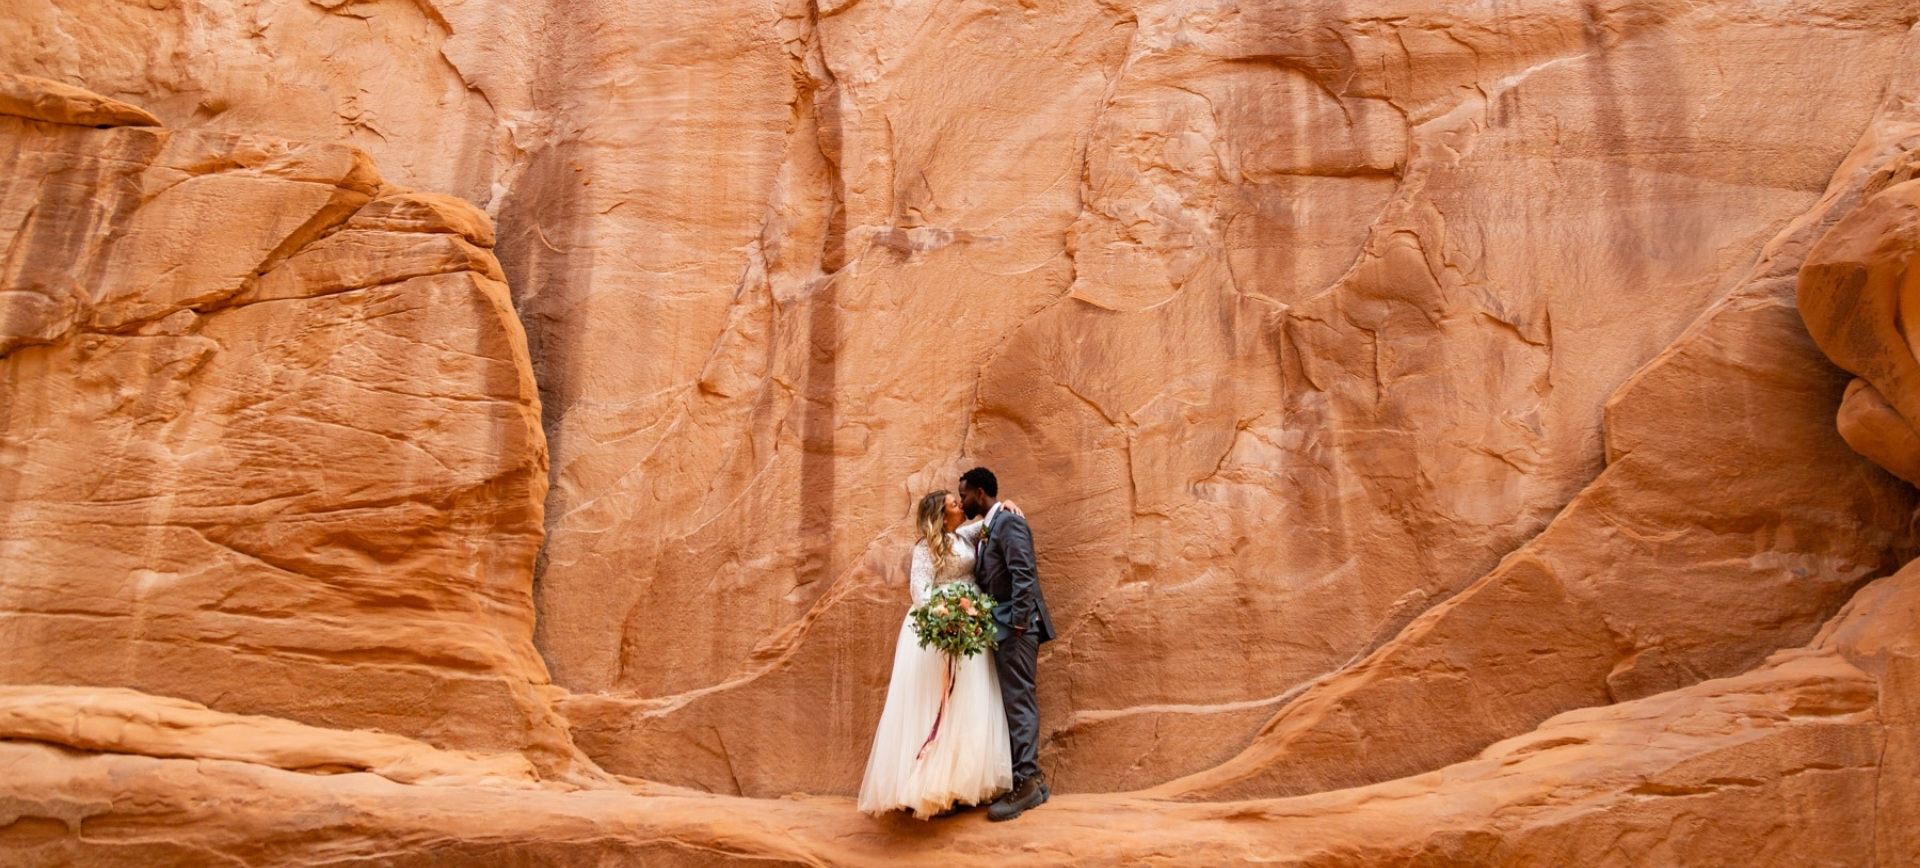 elopement in moab - adventure wedding in moab desert